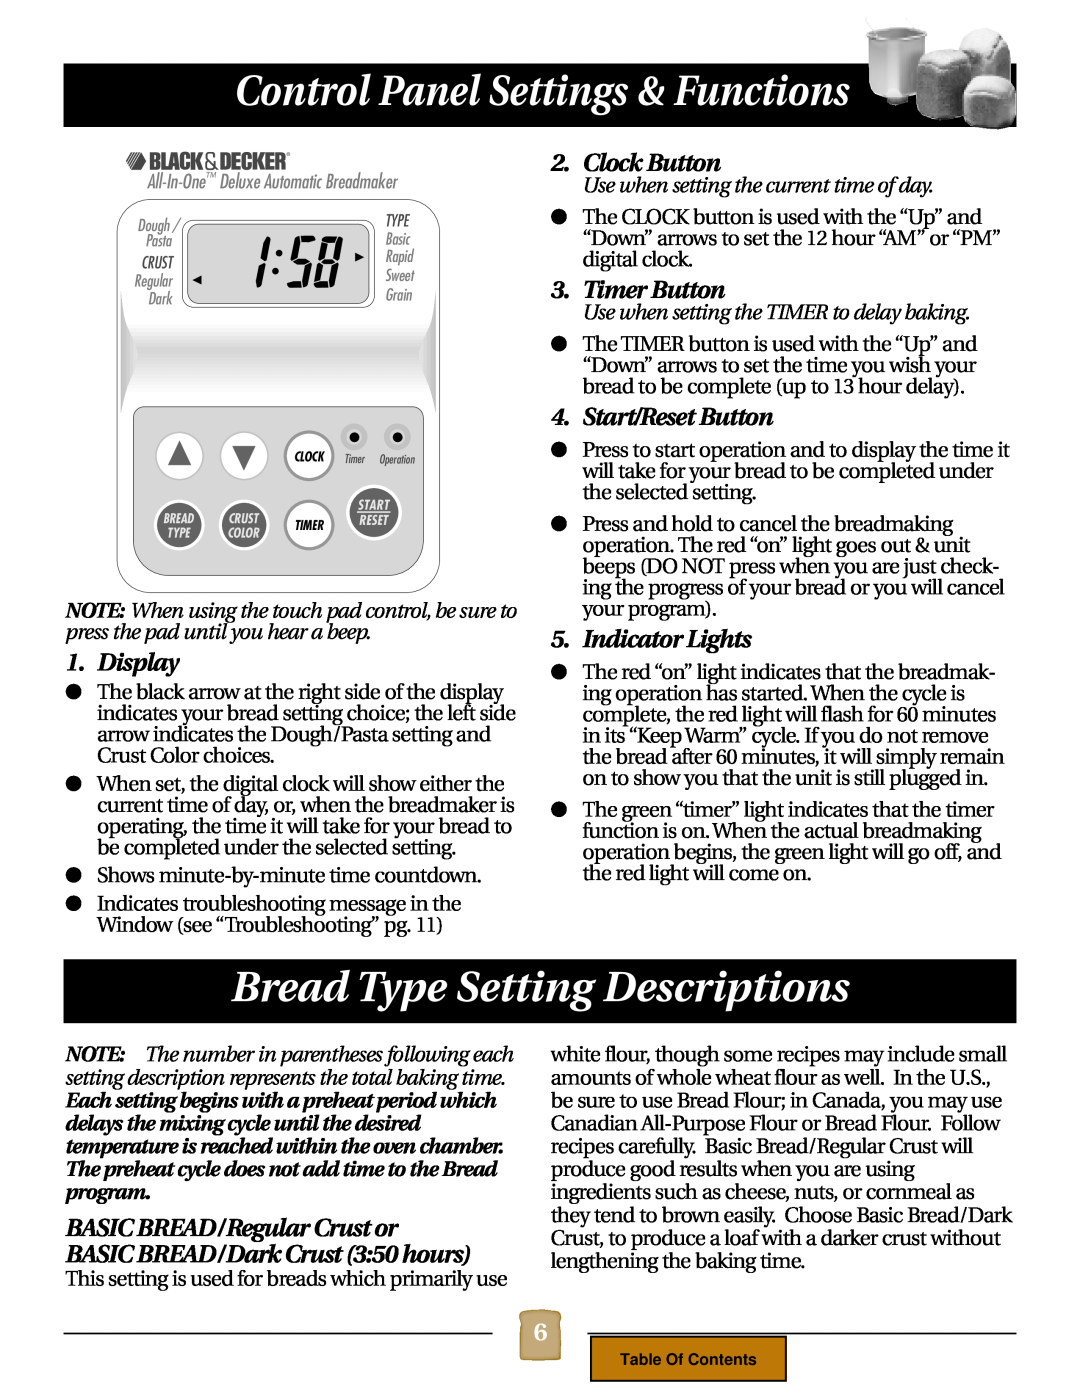 Black & Decker B1620 manual Control Panel Settings & Functions, Bread Type Setting Descriptions, Display, Clock Button 